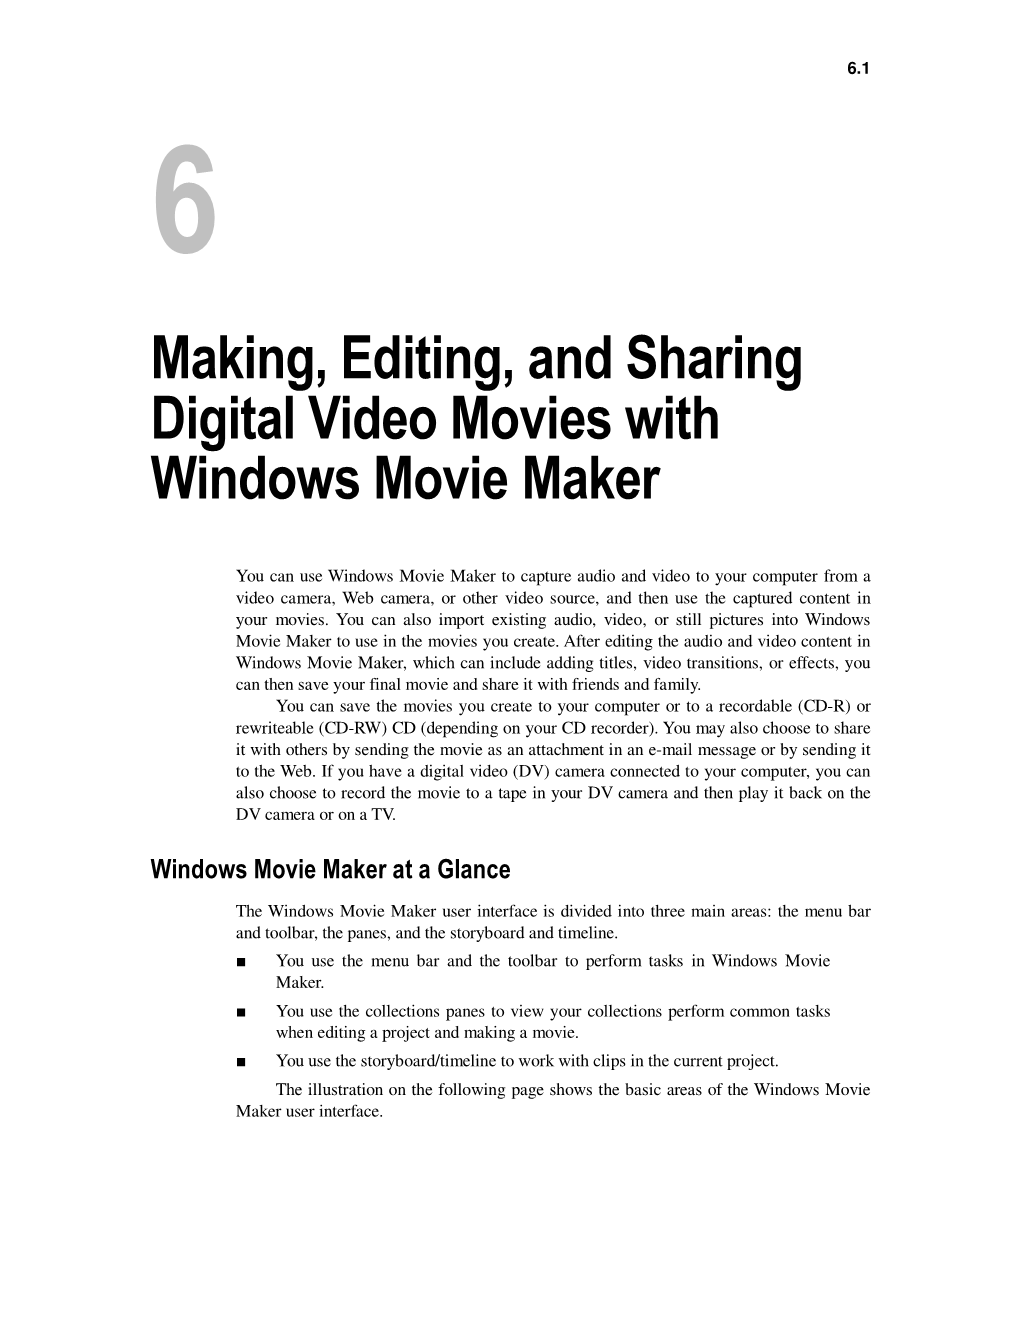 Digital Video with Windows Movie Maker